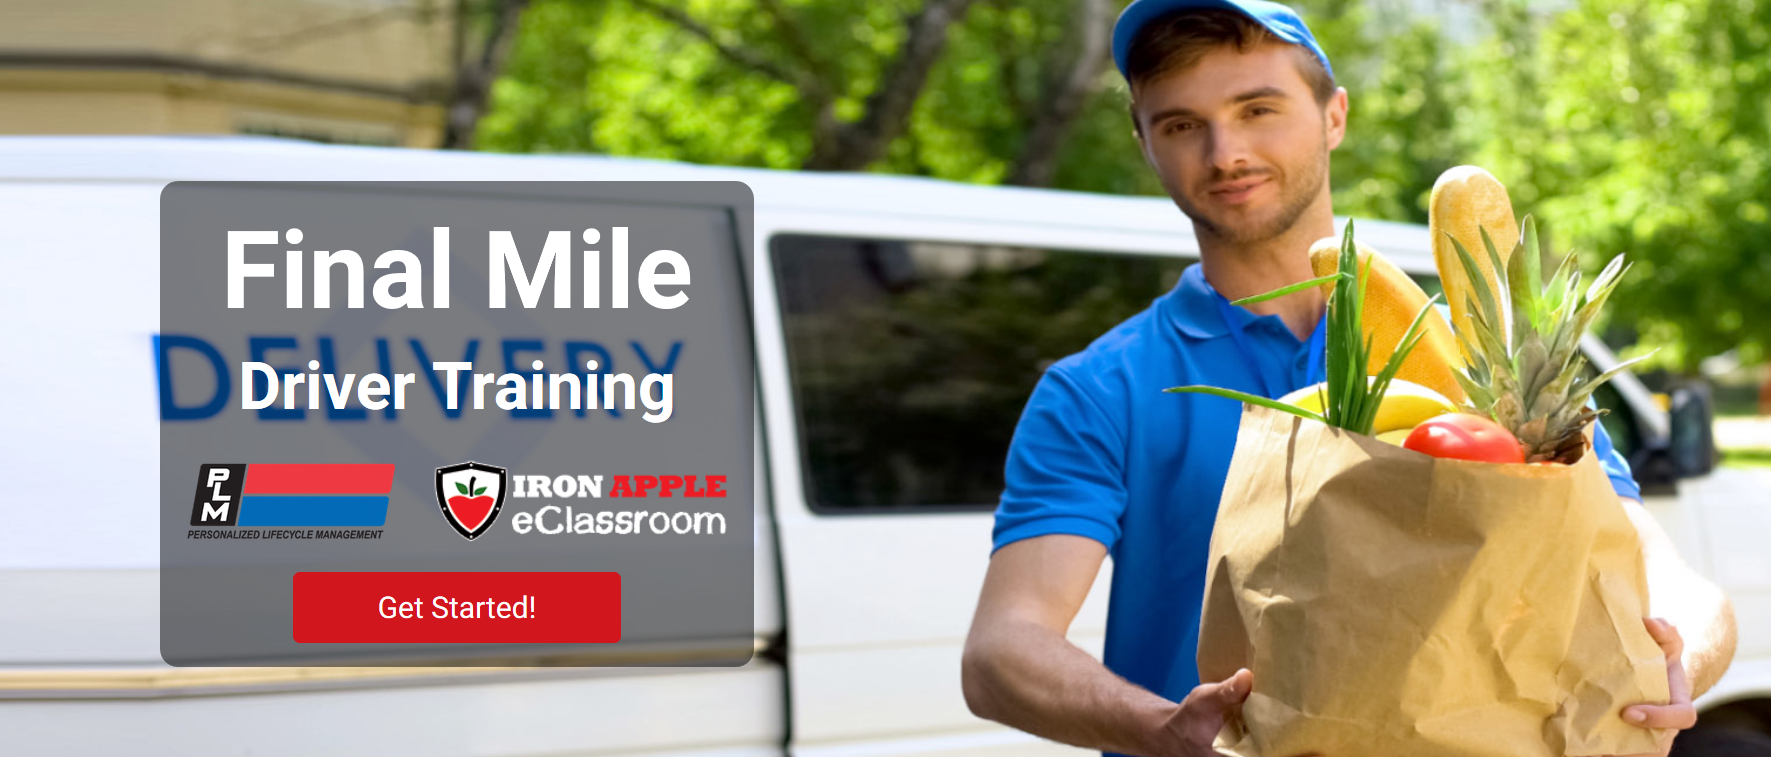 PLM offers Final Mile online training certification